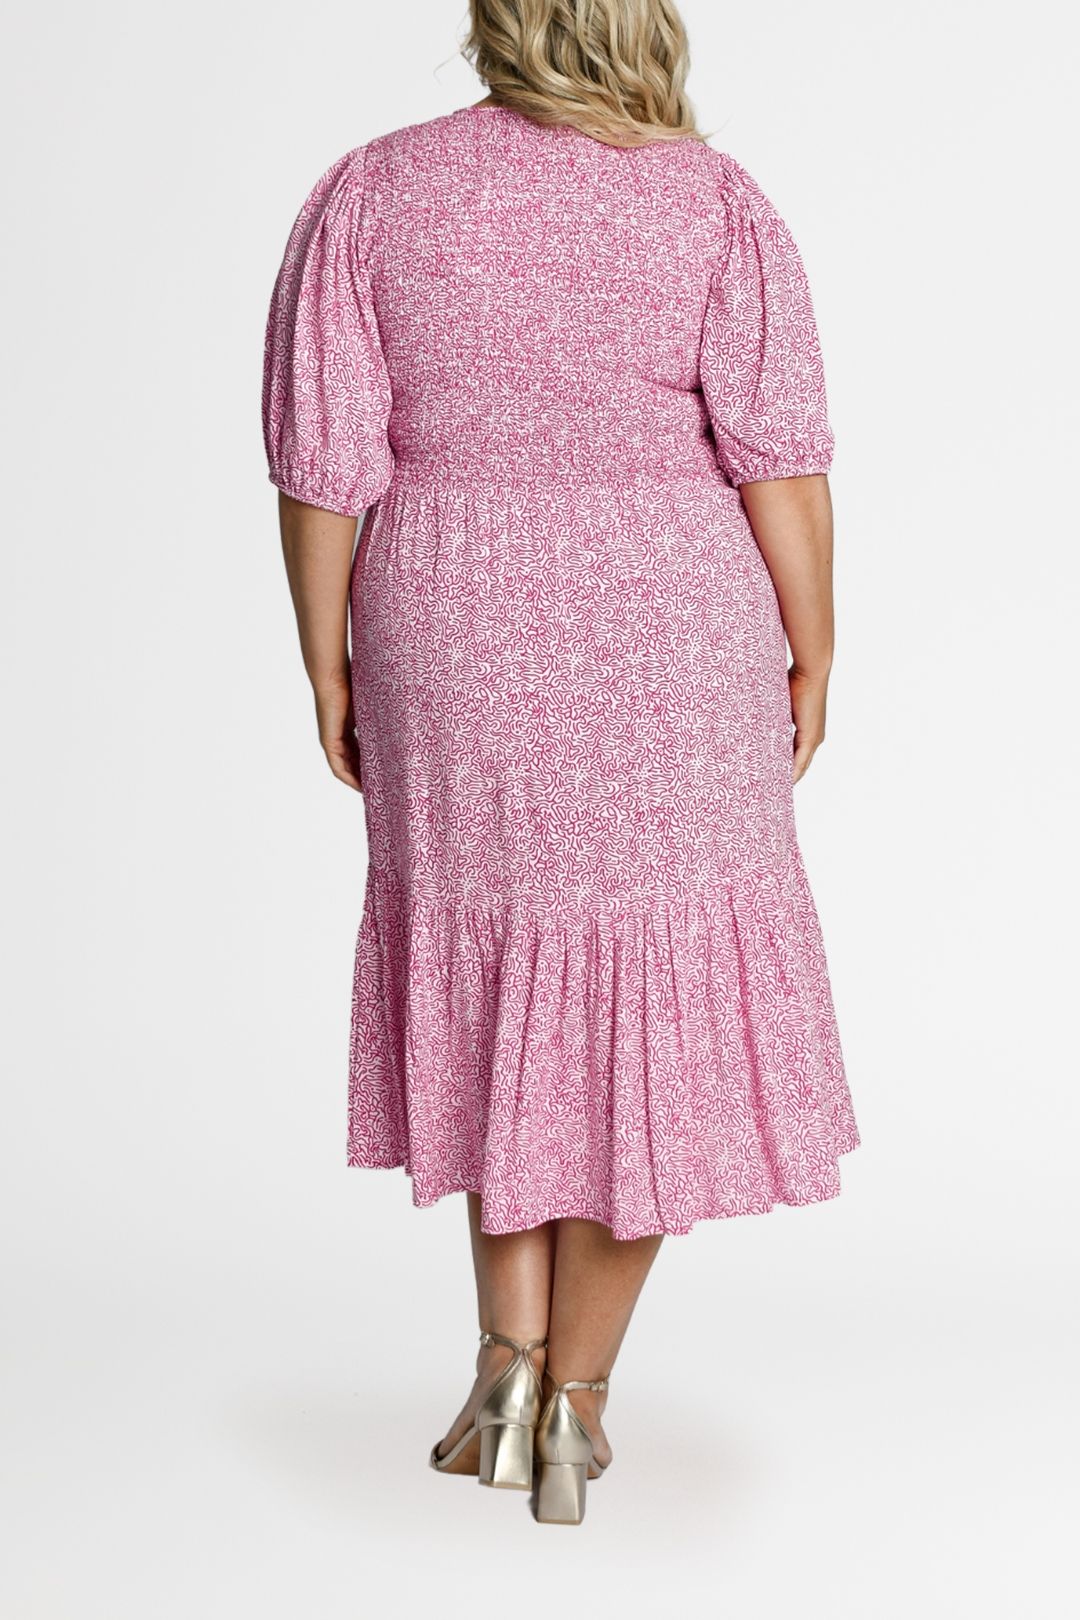 Dani Marie Mia Blouse Sleeve Dress Pink 3/4 Sleeves